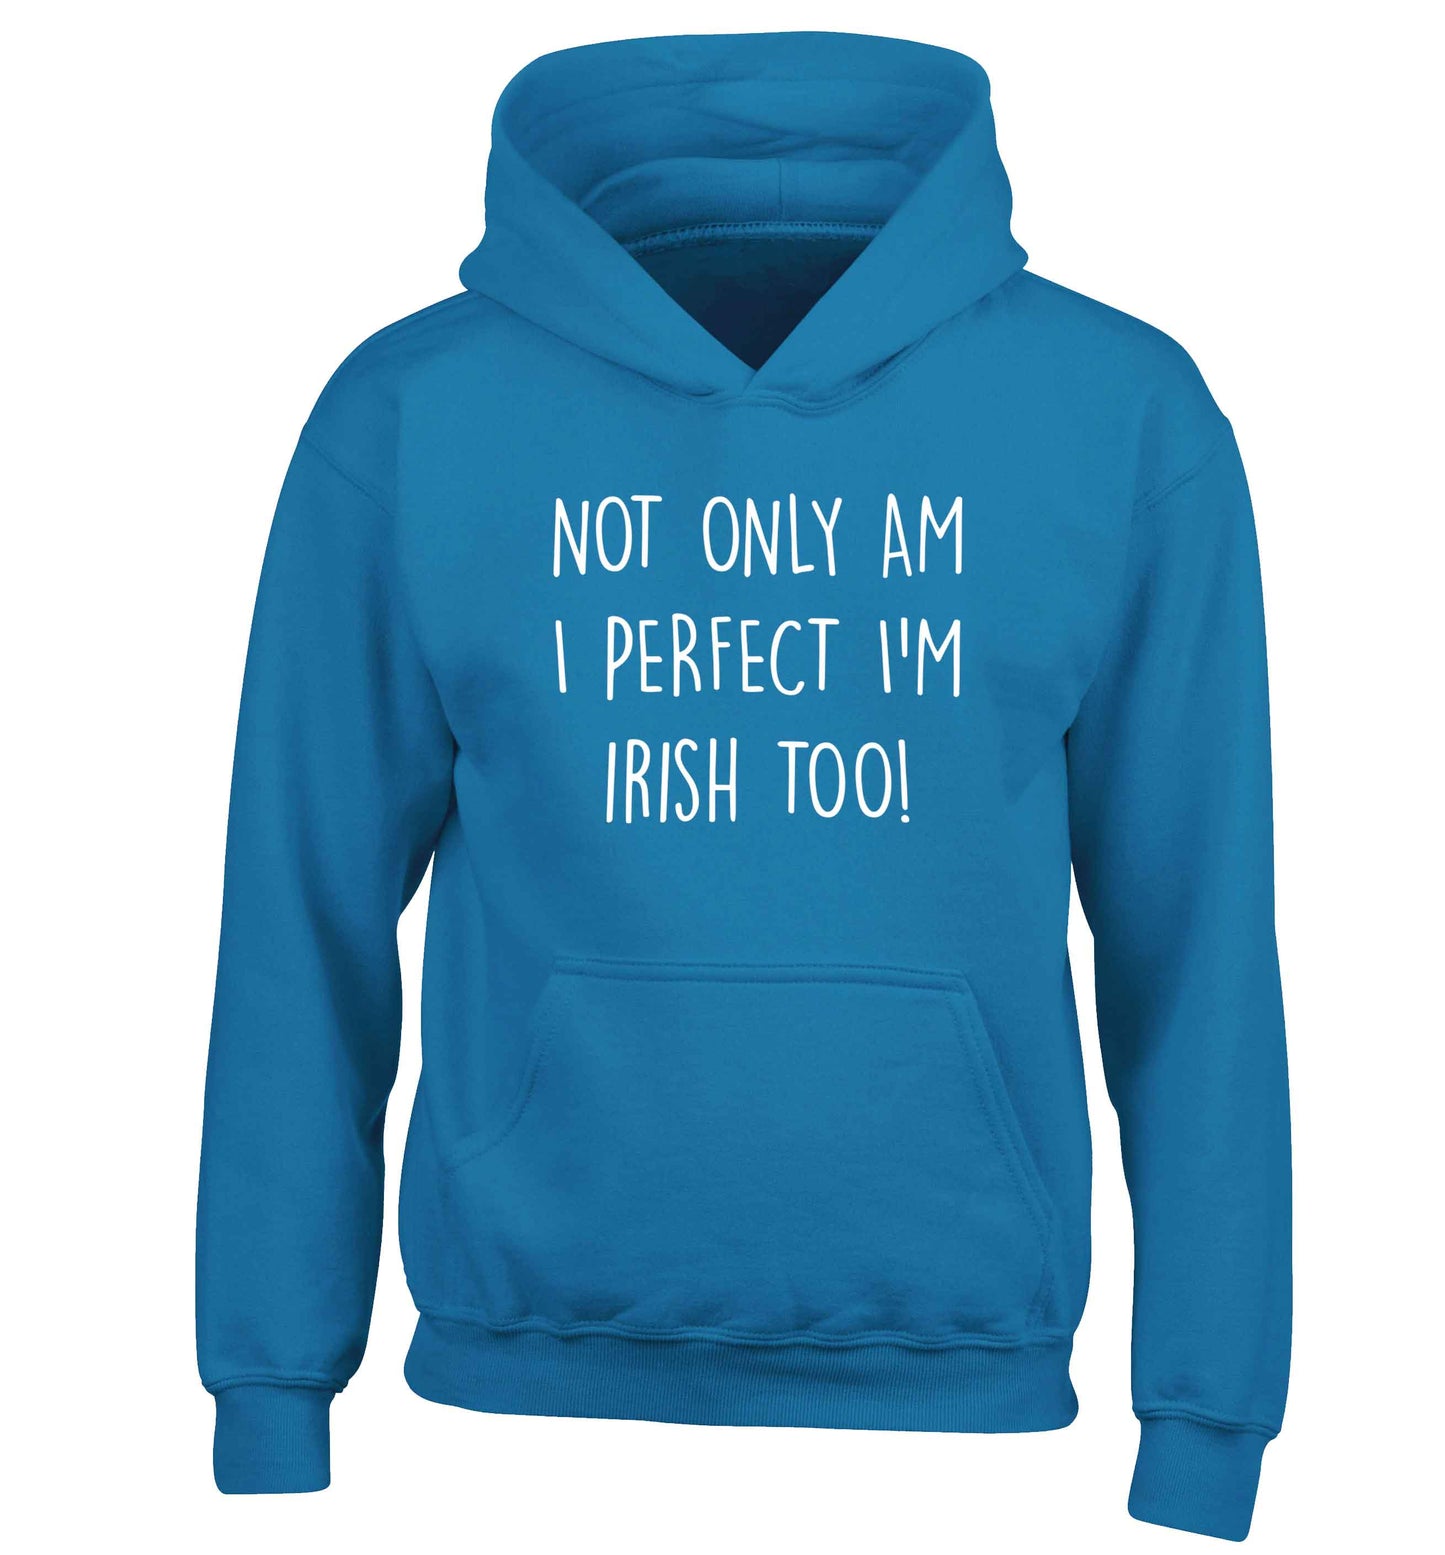 Not only am I perfect I'm Irish too! children's blue hoodie 12-13 Years